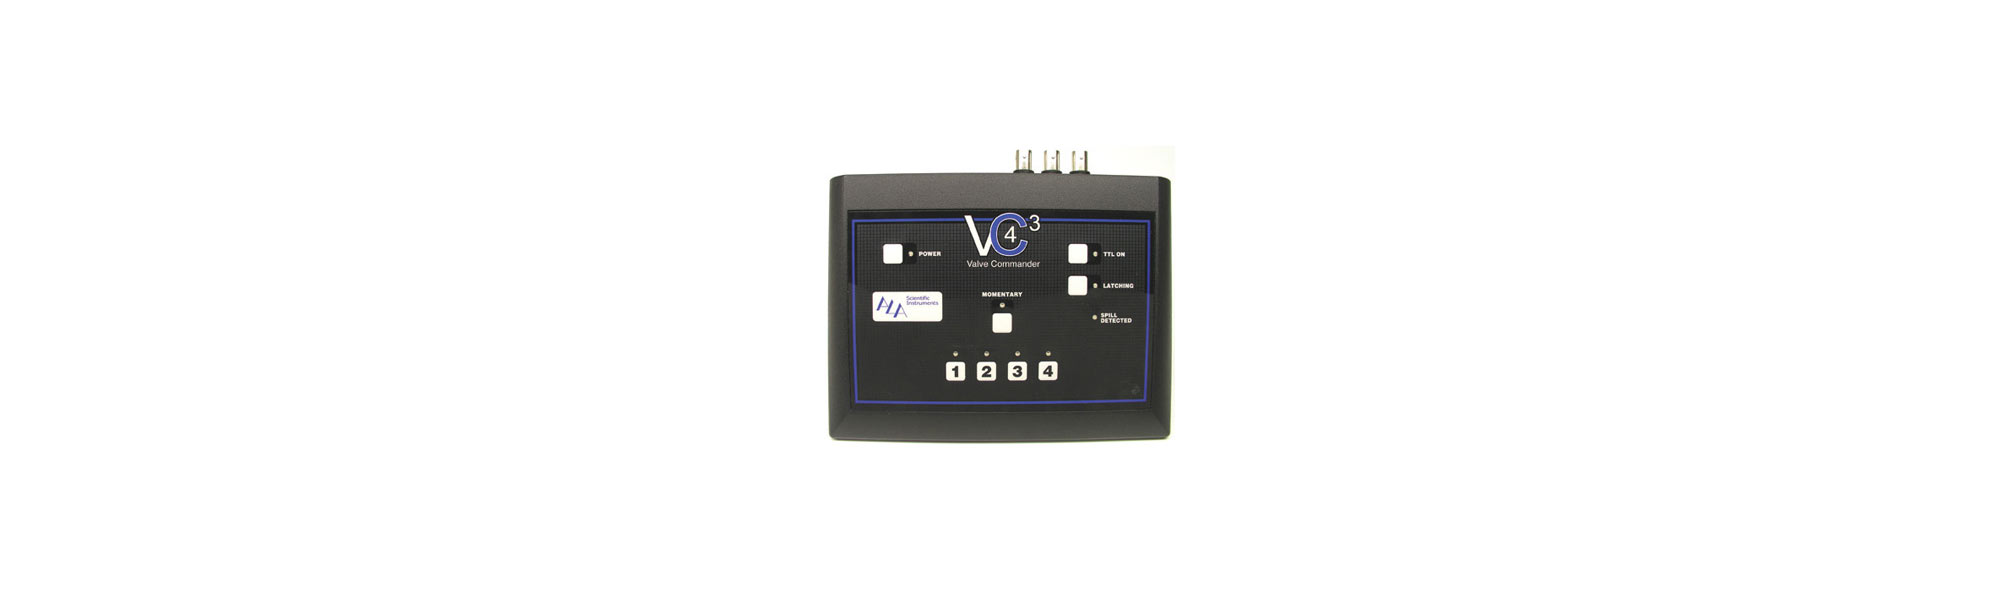 ALA Scientific Instruments VC3 4 Controller